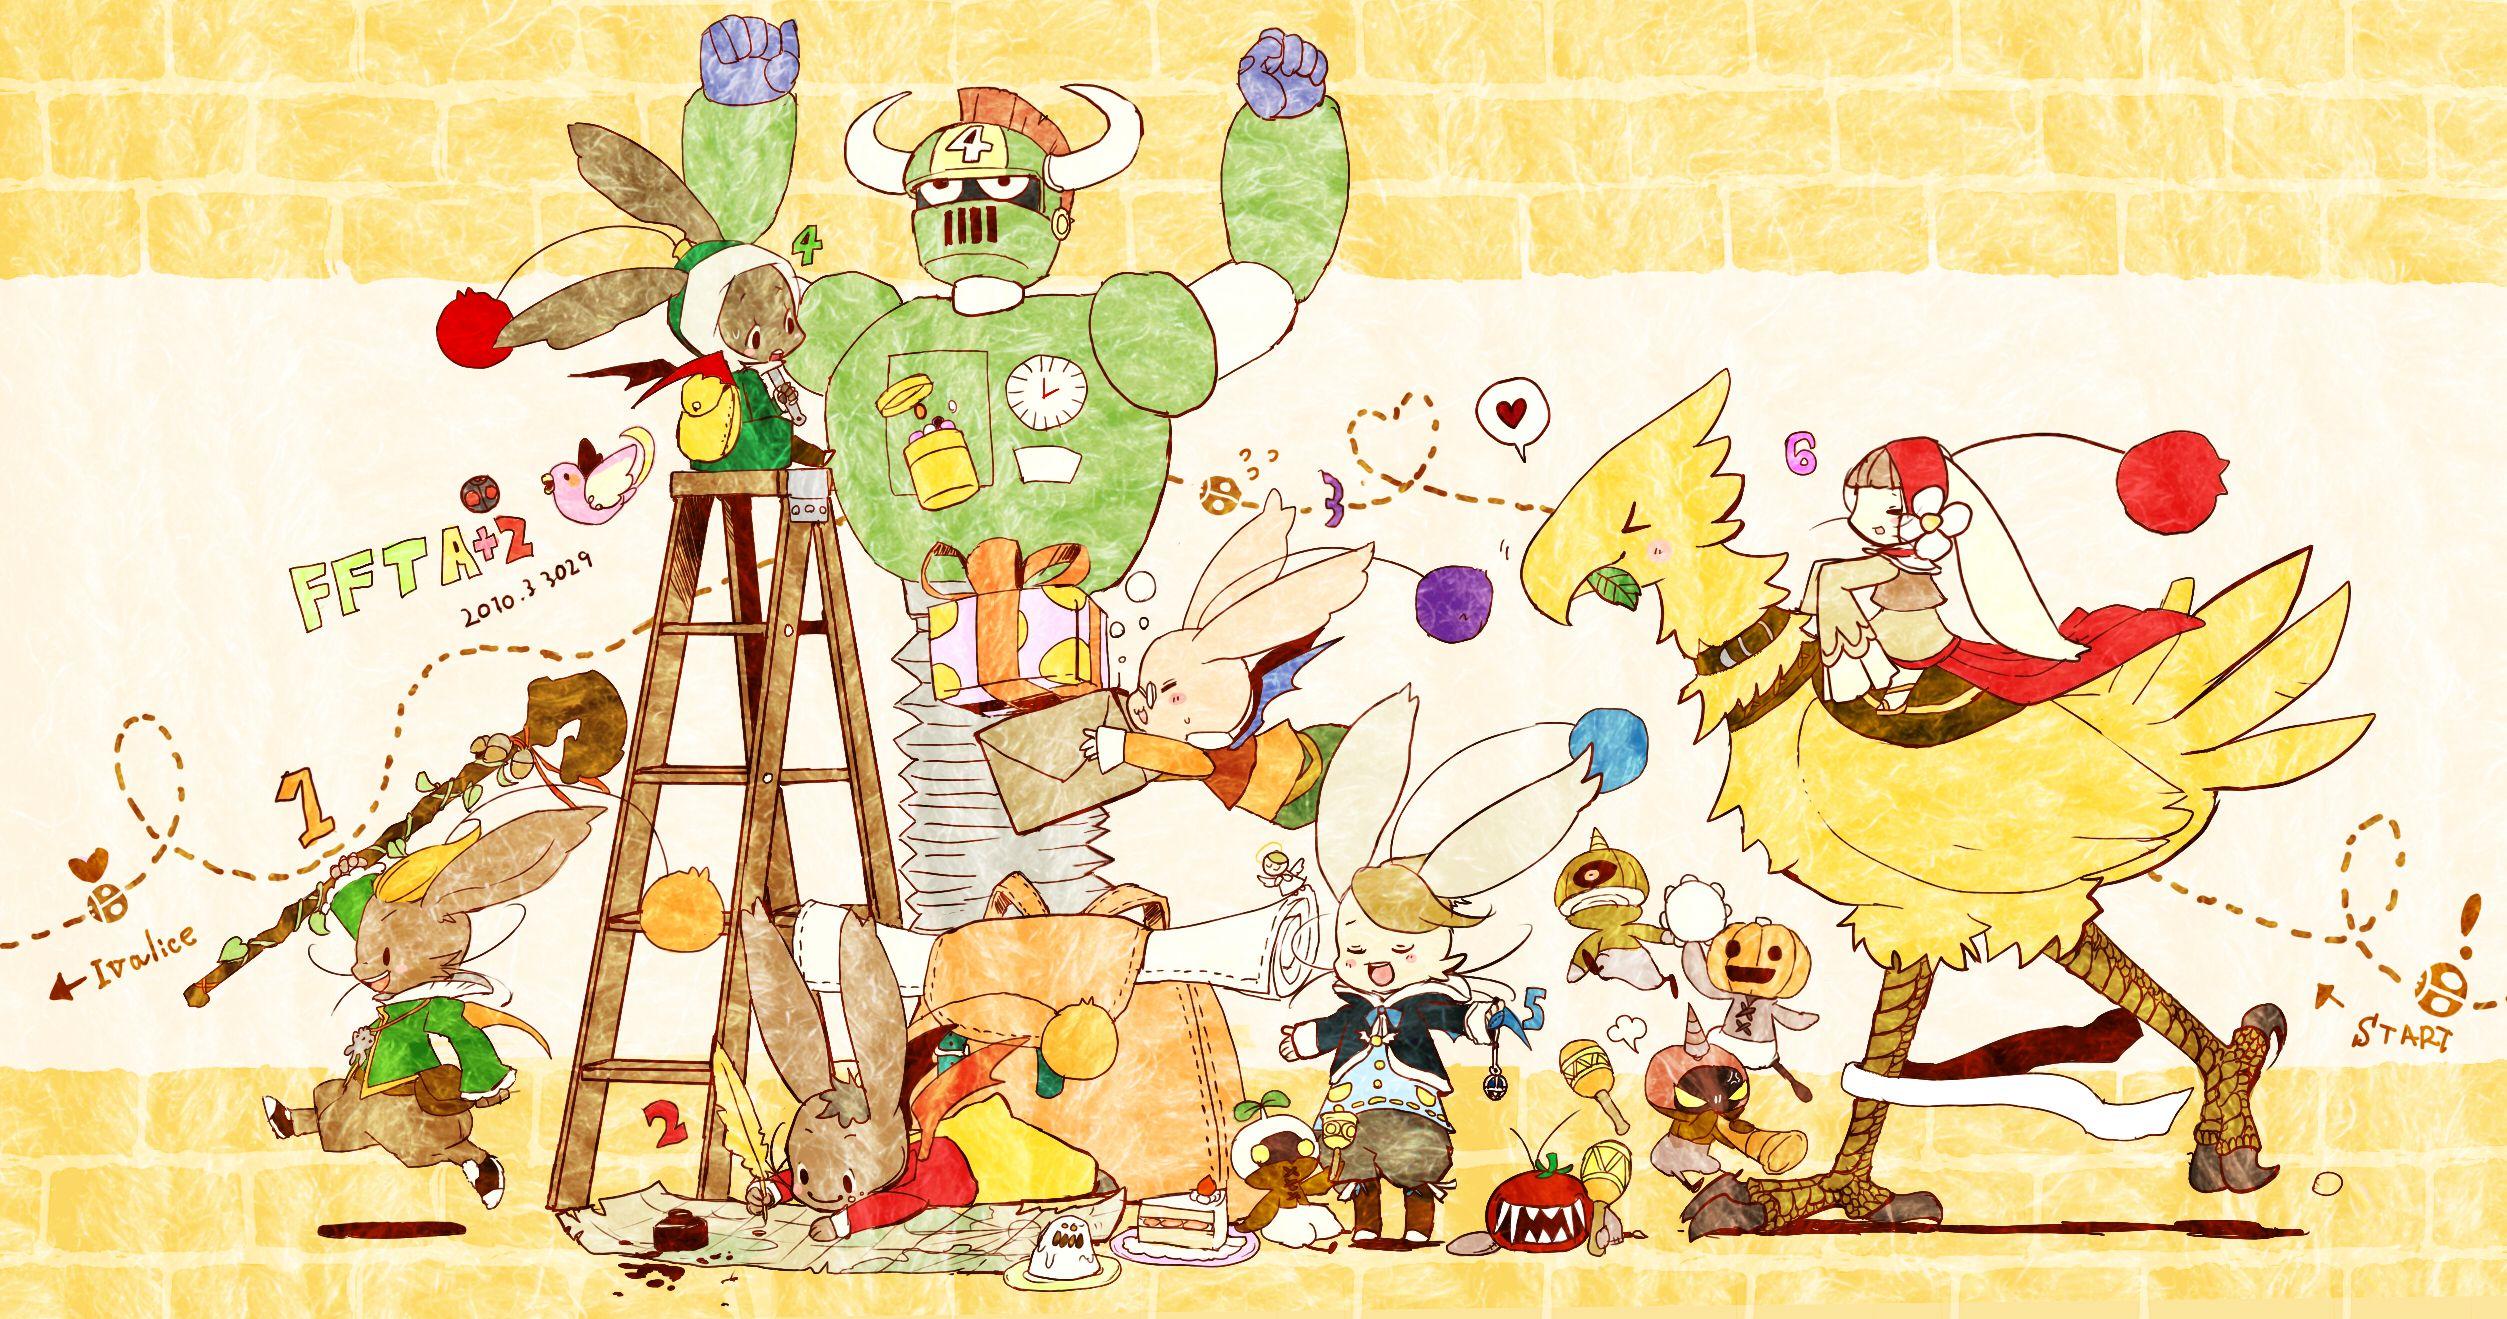 Final Fantasy Tactics Wallpaper Anime Image Board